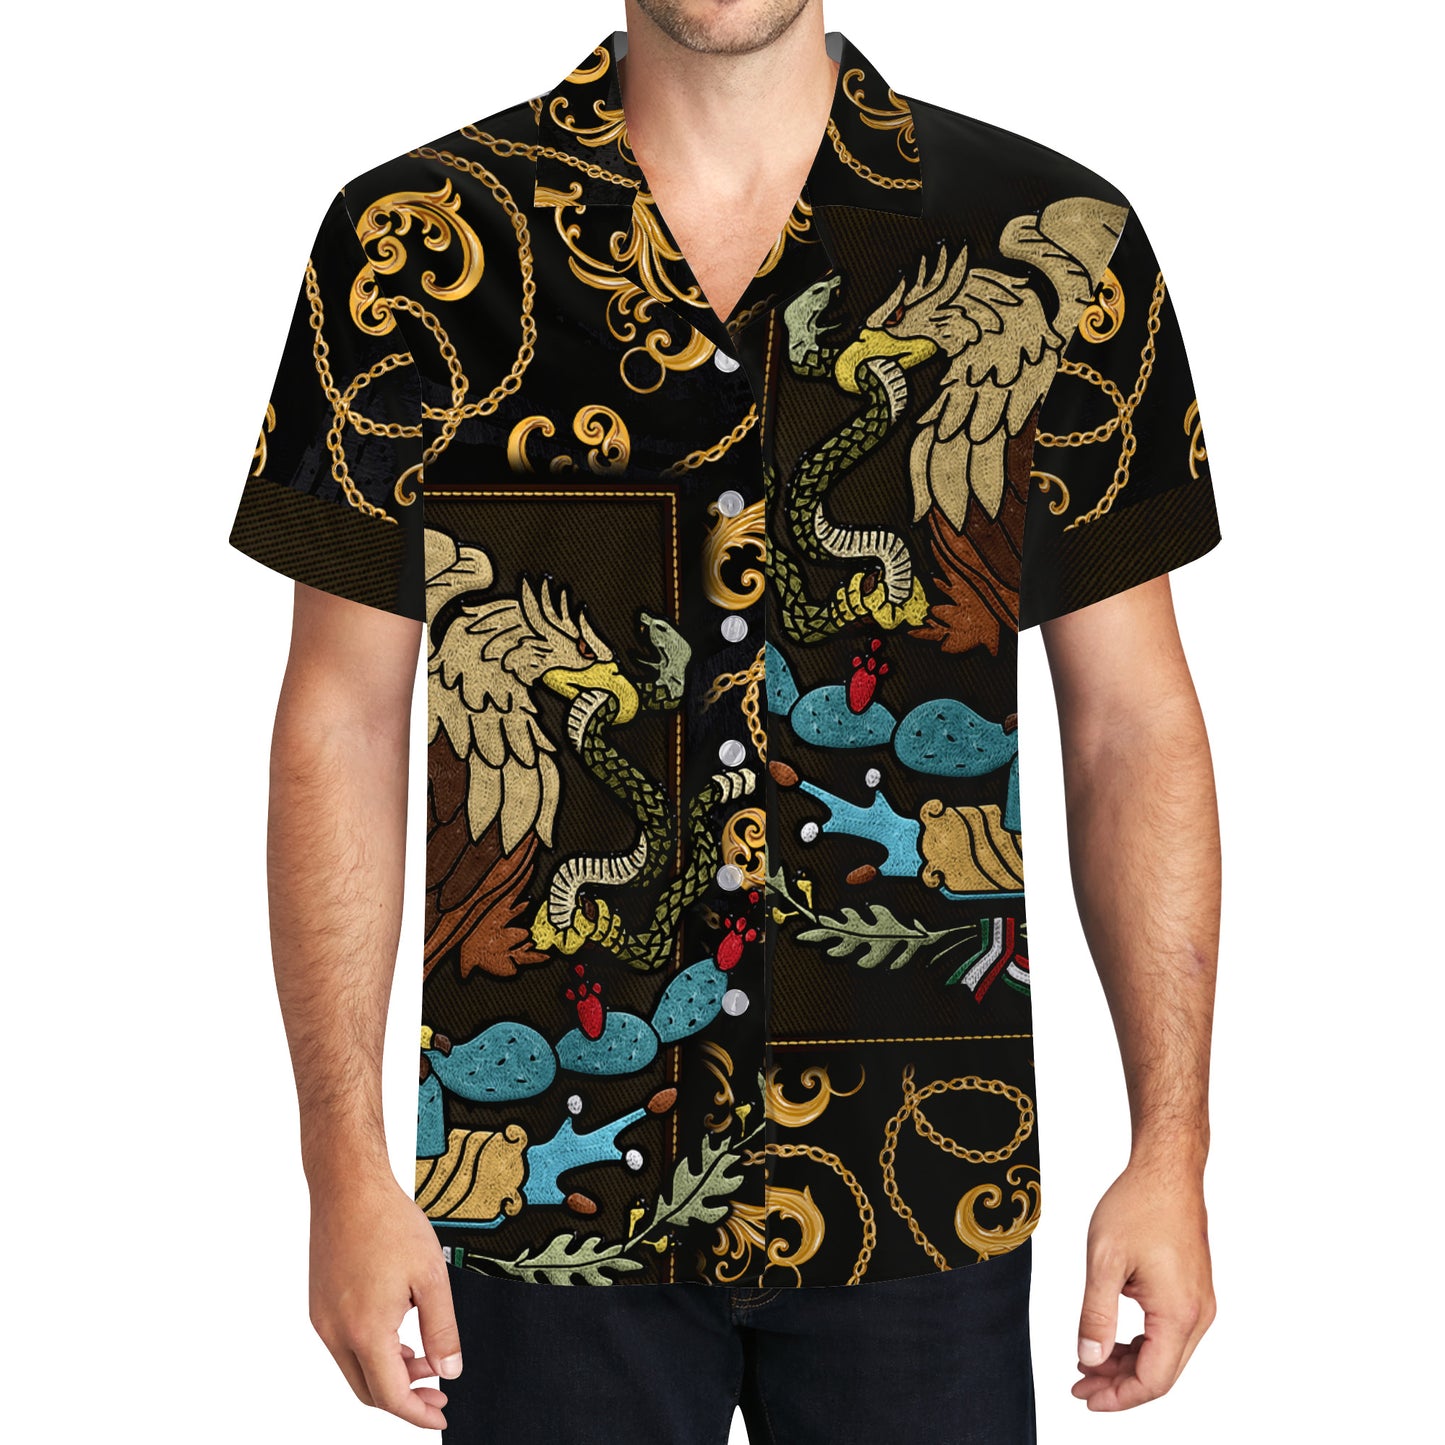 The Golden Eagle - Camisa hawaiana unisex personalizada - HW_MX09